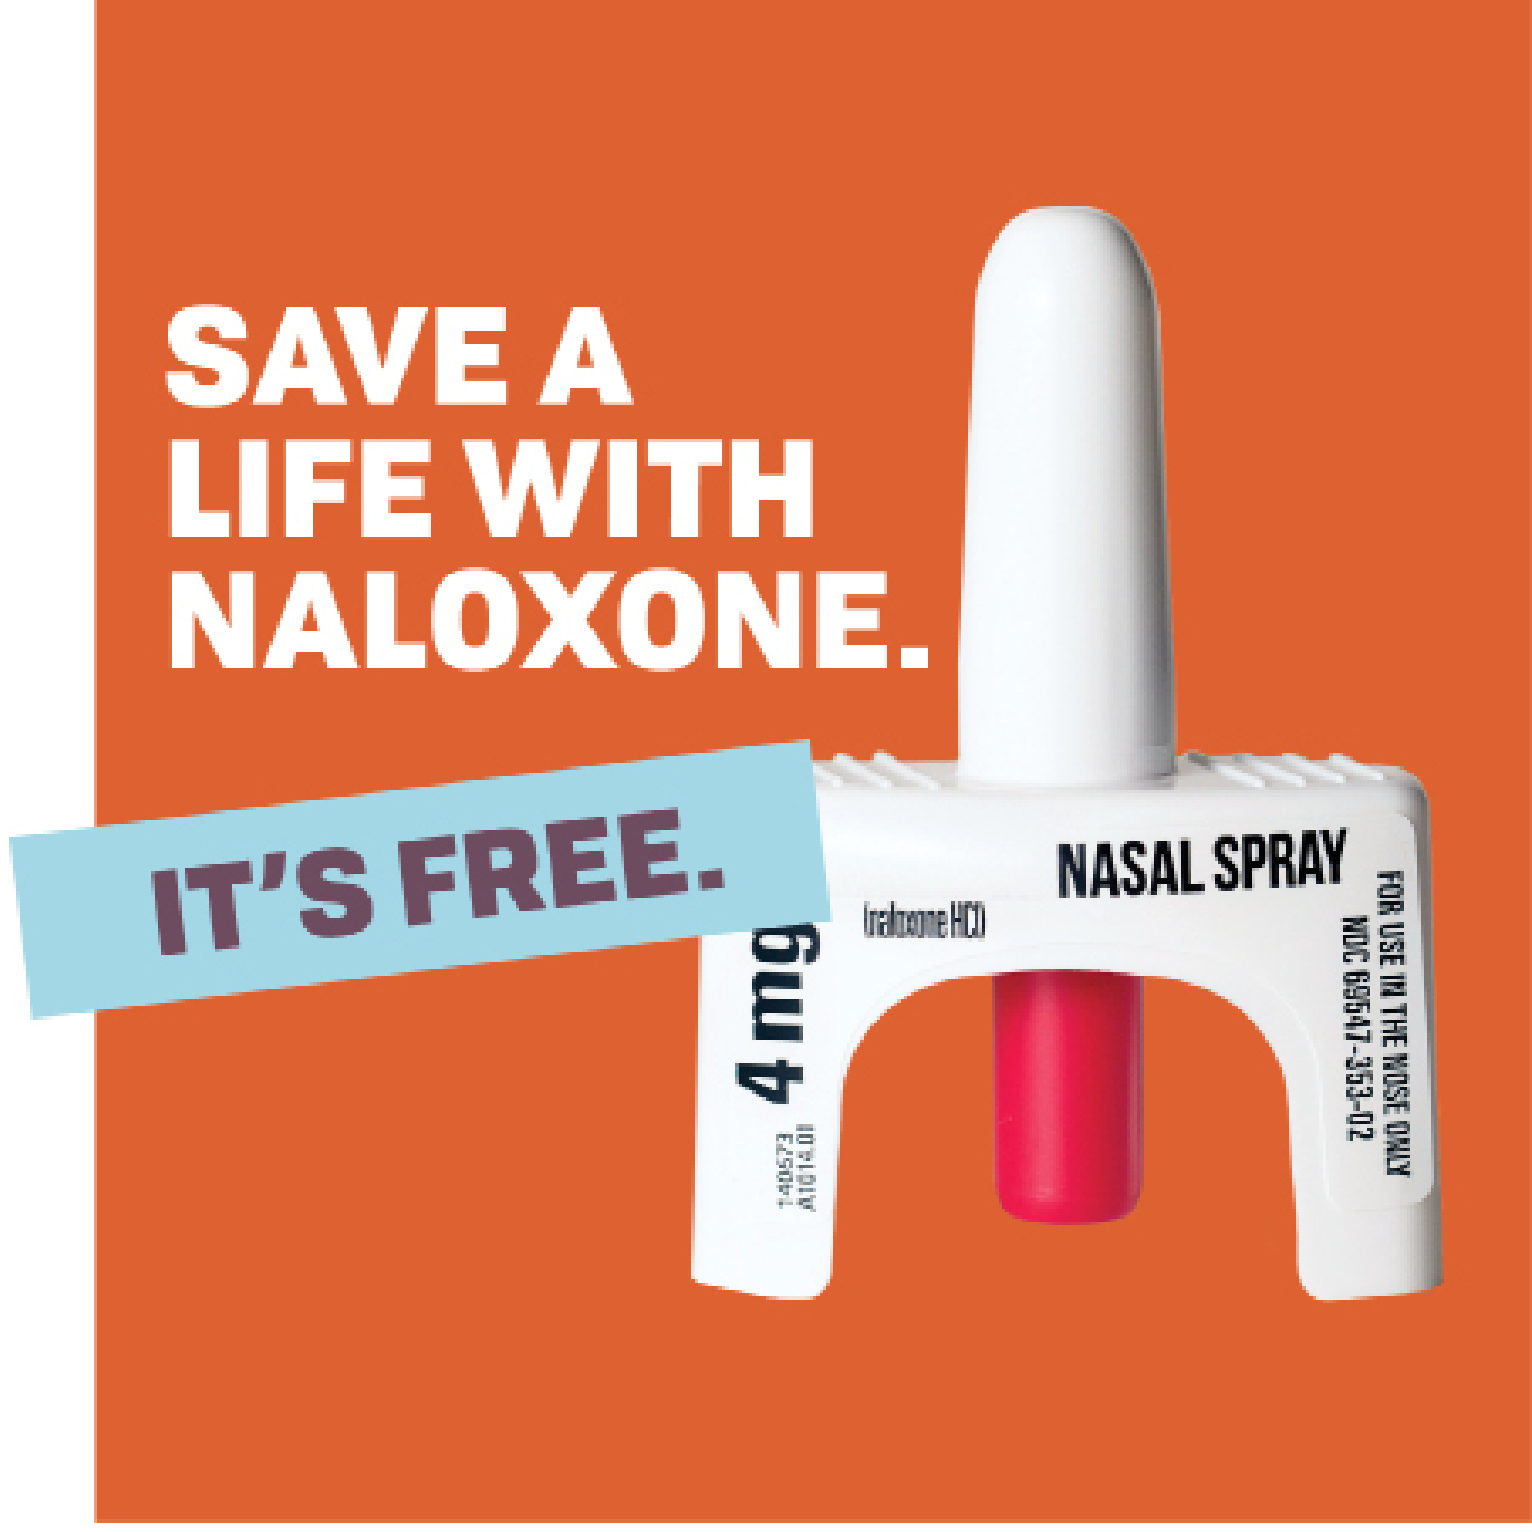 Save a life with Naloxone